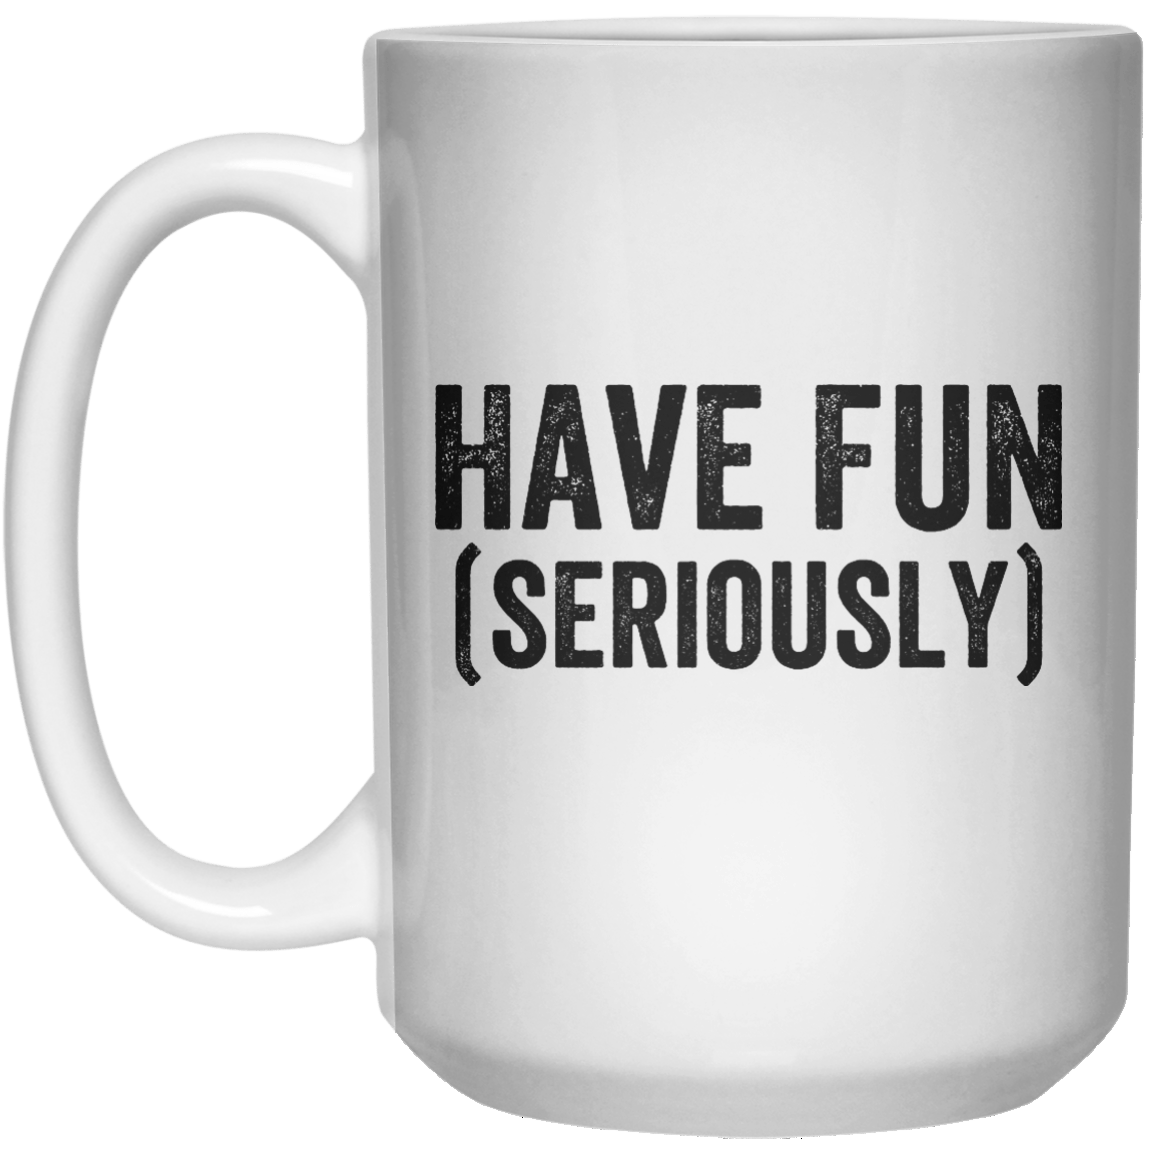 Have Fun (seriously) MUG  Mug - 15oz - Shirtoopia